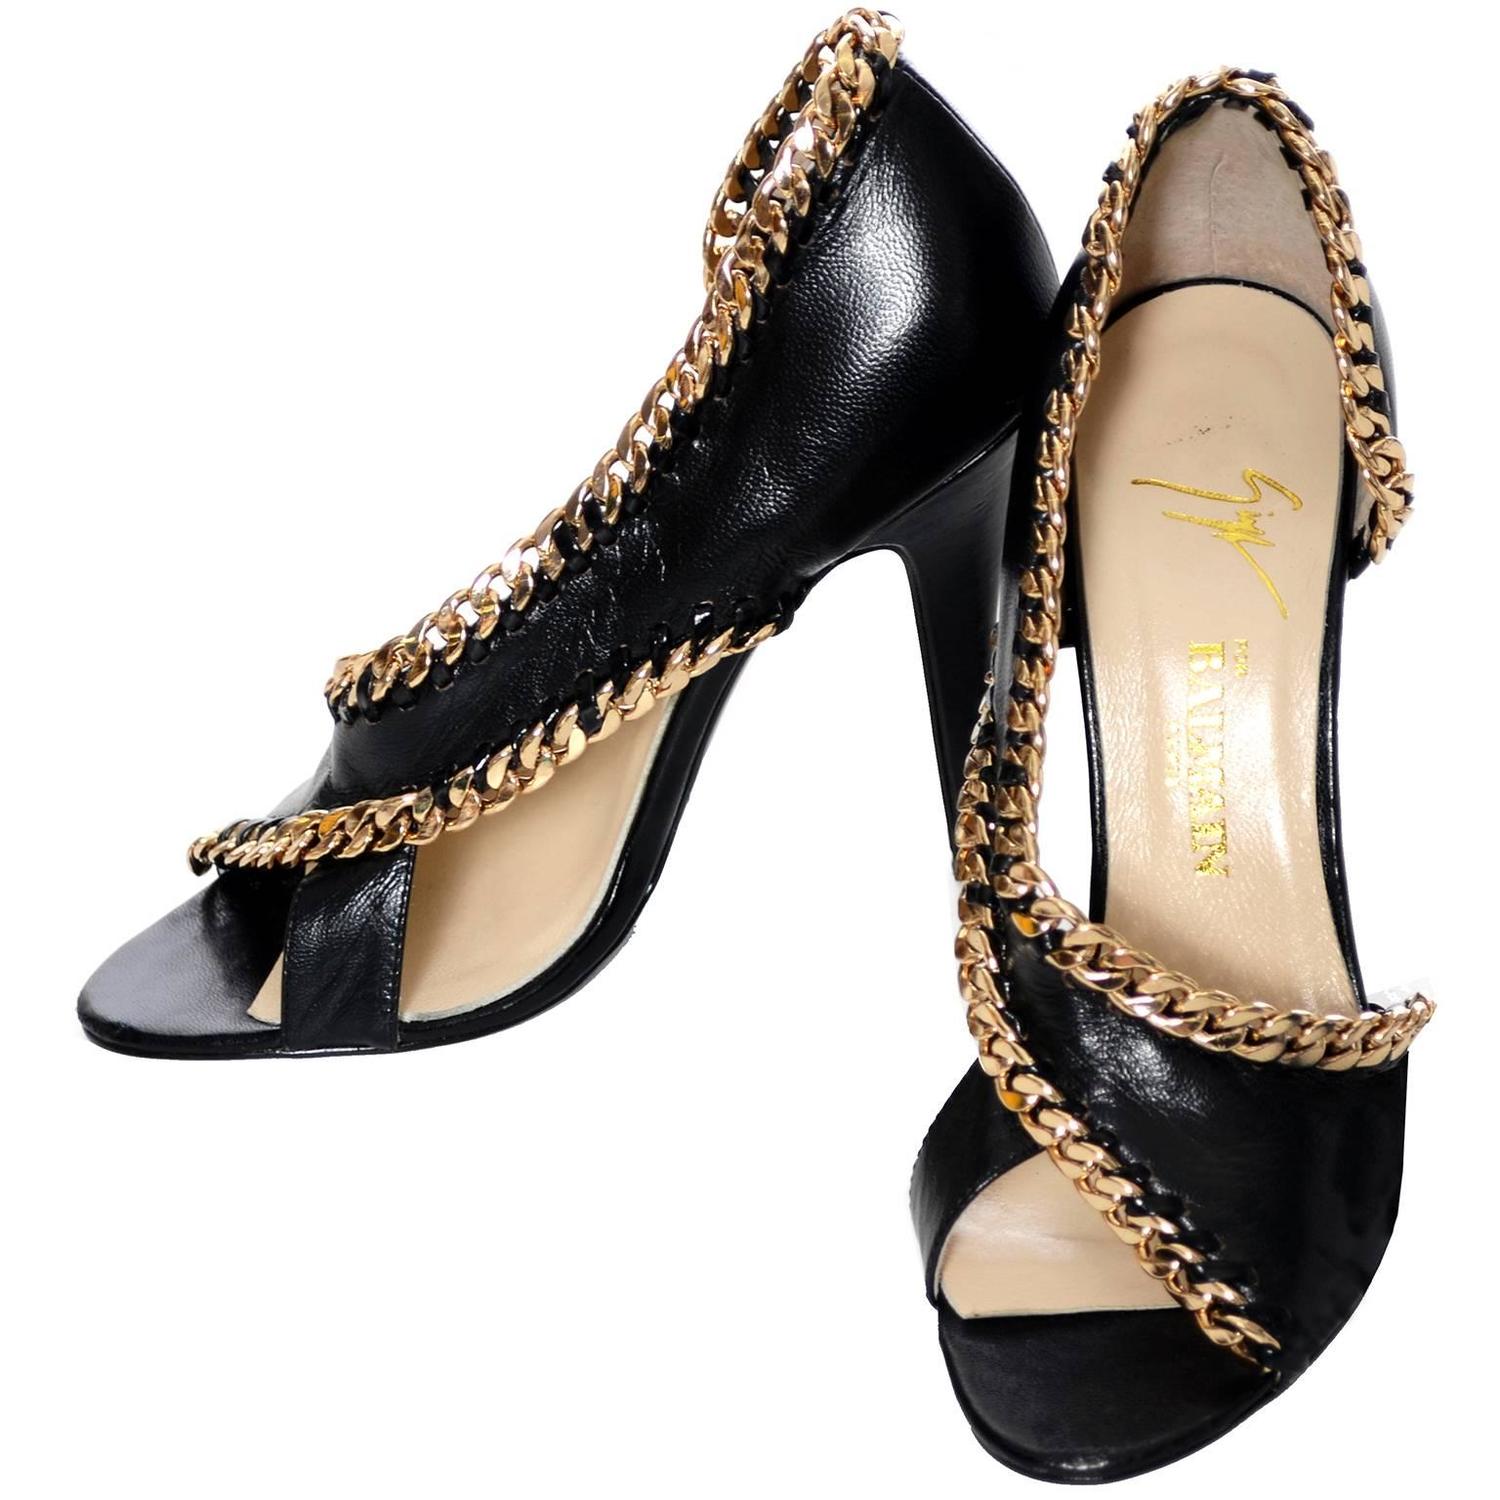 Giuseppe Zanotti for Balmain Paris Shoes Black Leather Heels Chain ...